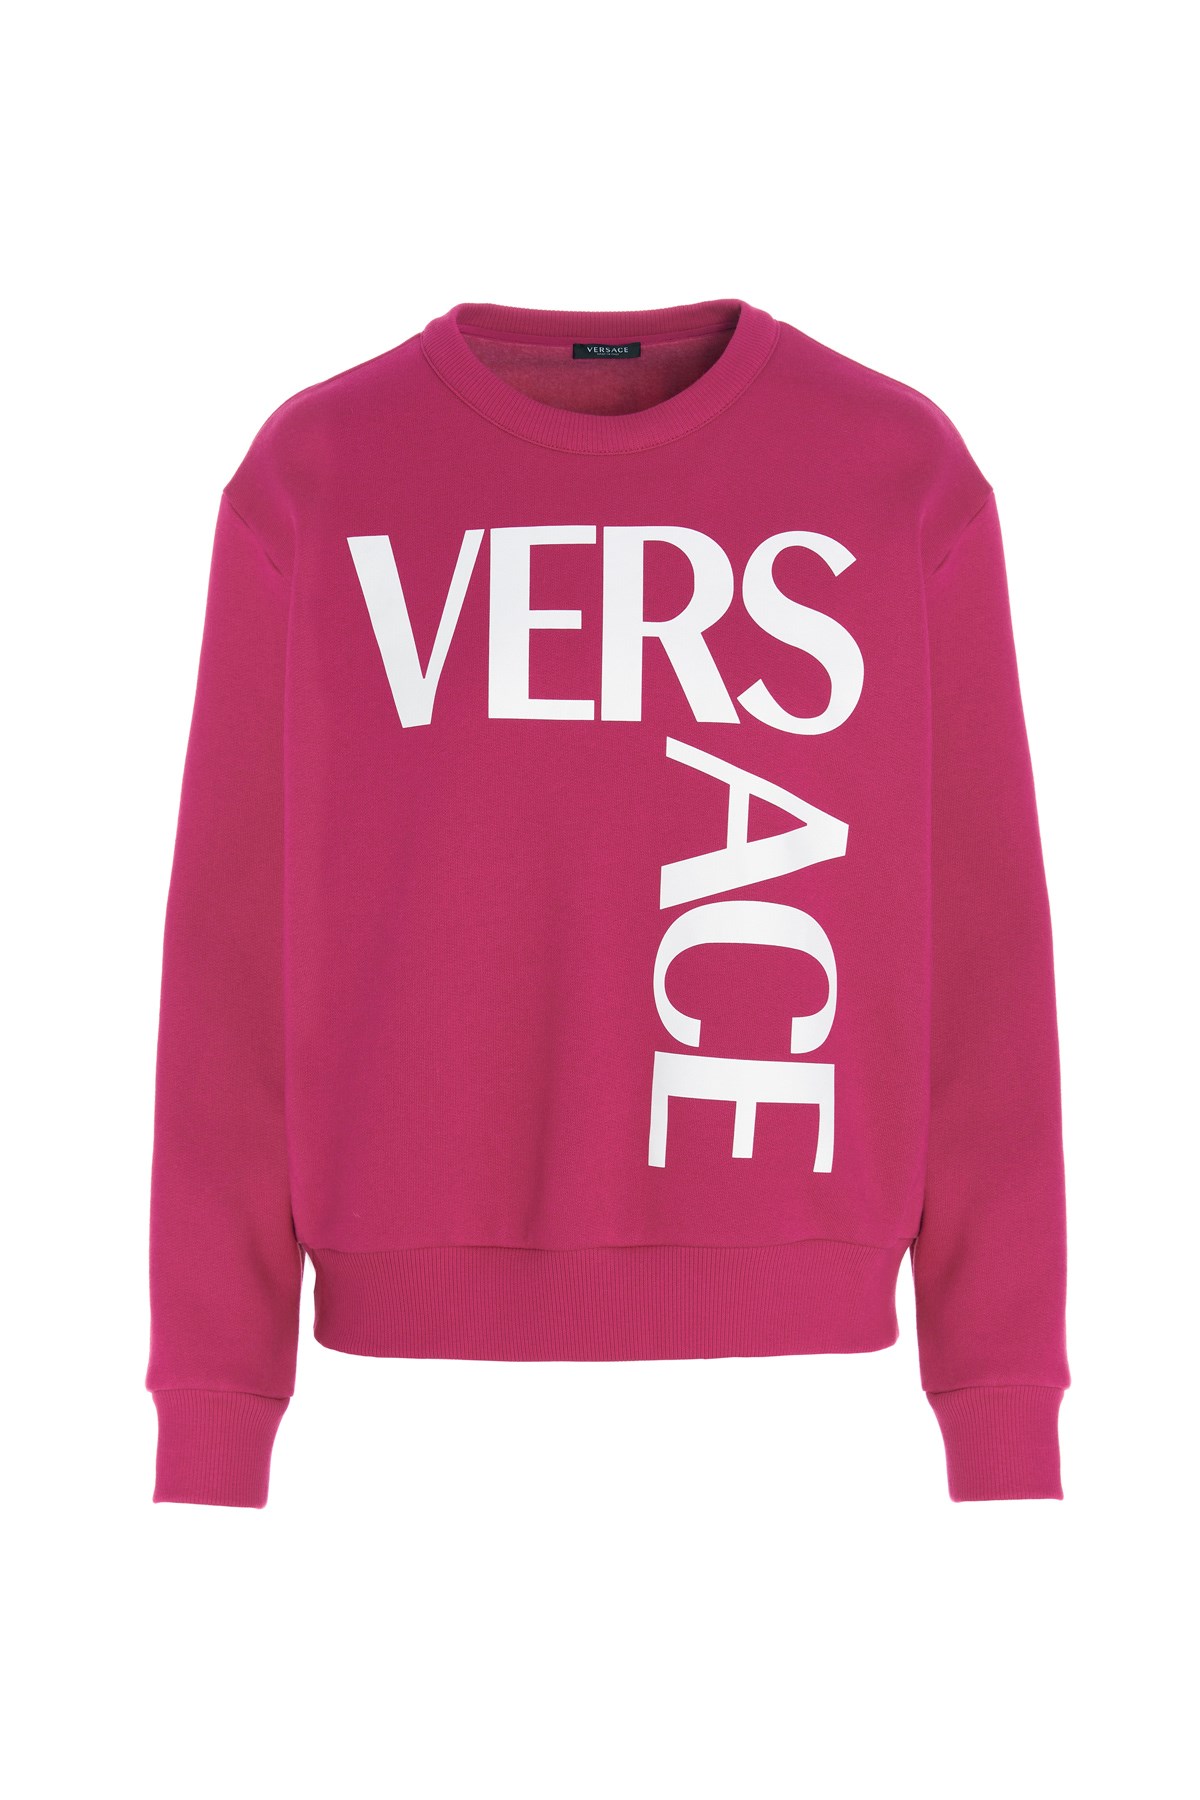 VERSACE Logo And Fret Pattern Sweatshirt